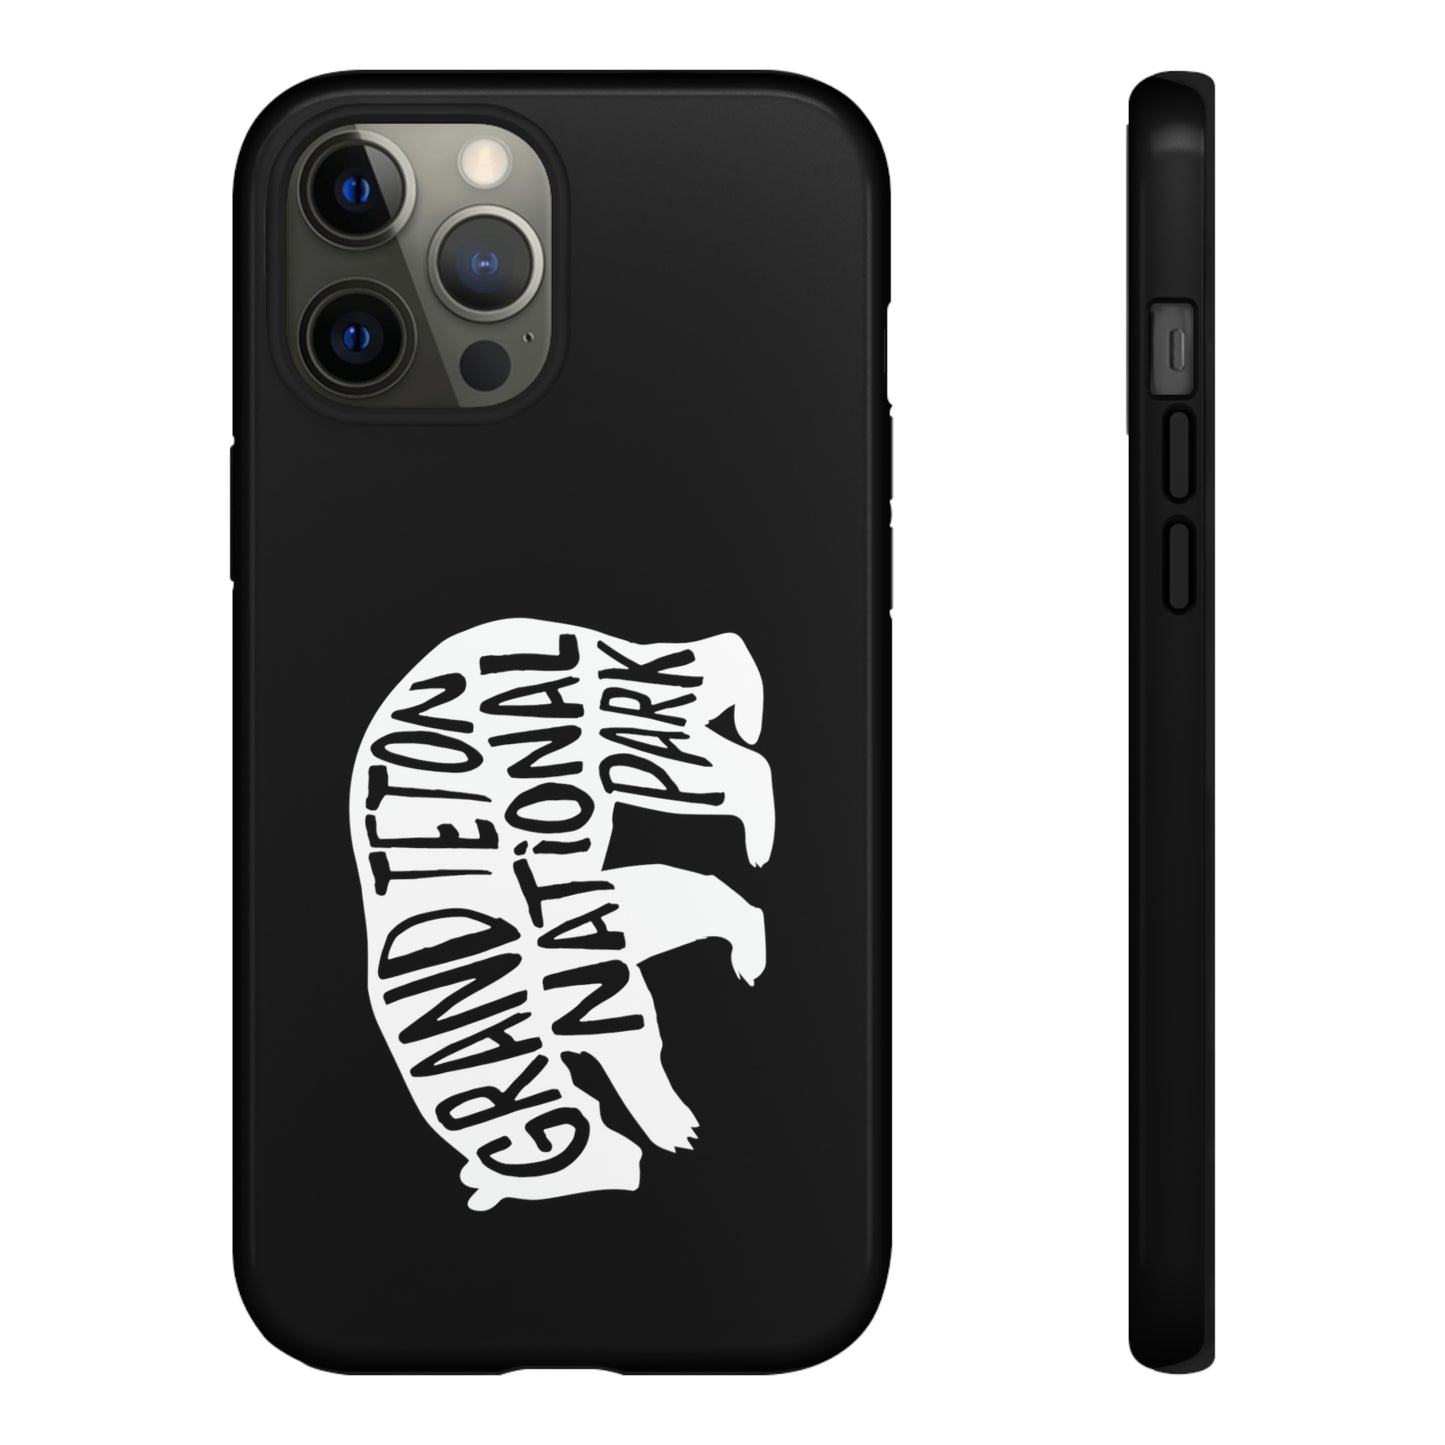 Grand Teton National Park Phone Case - Grizzly Bear Design